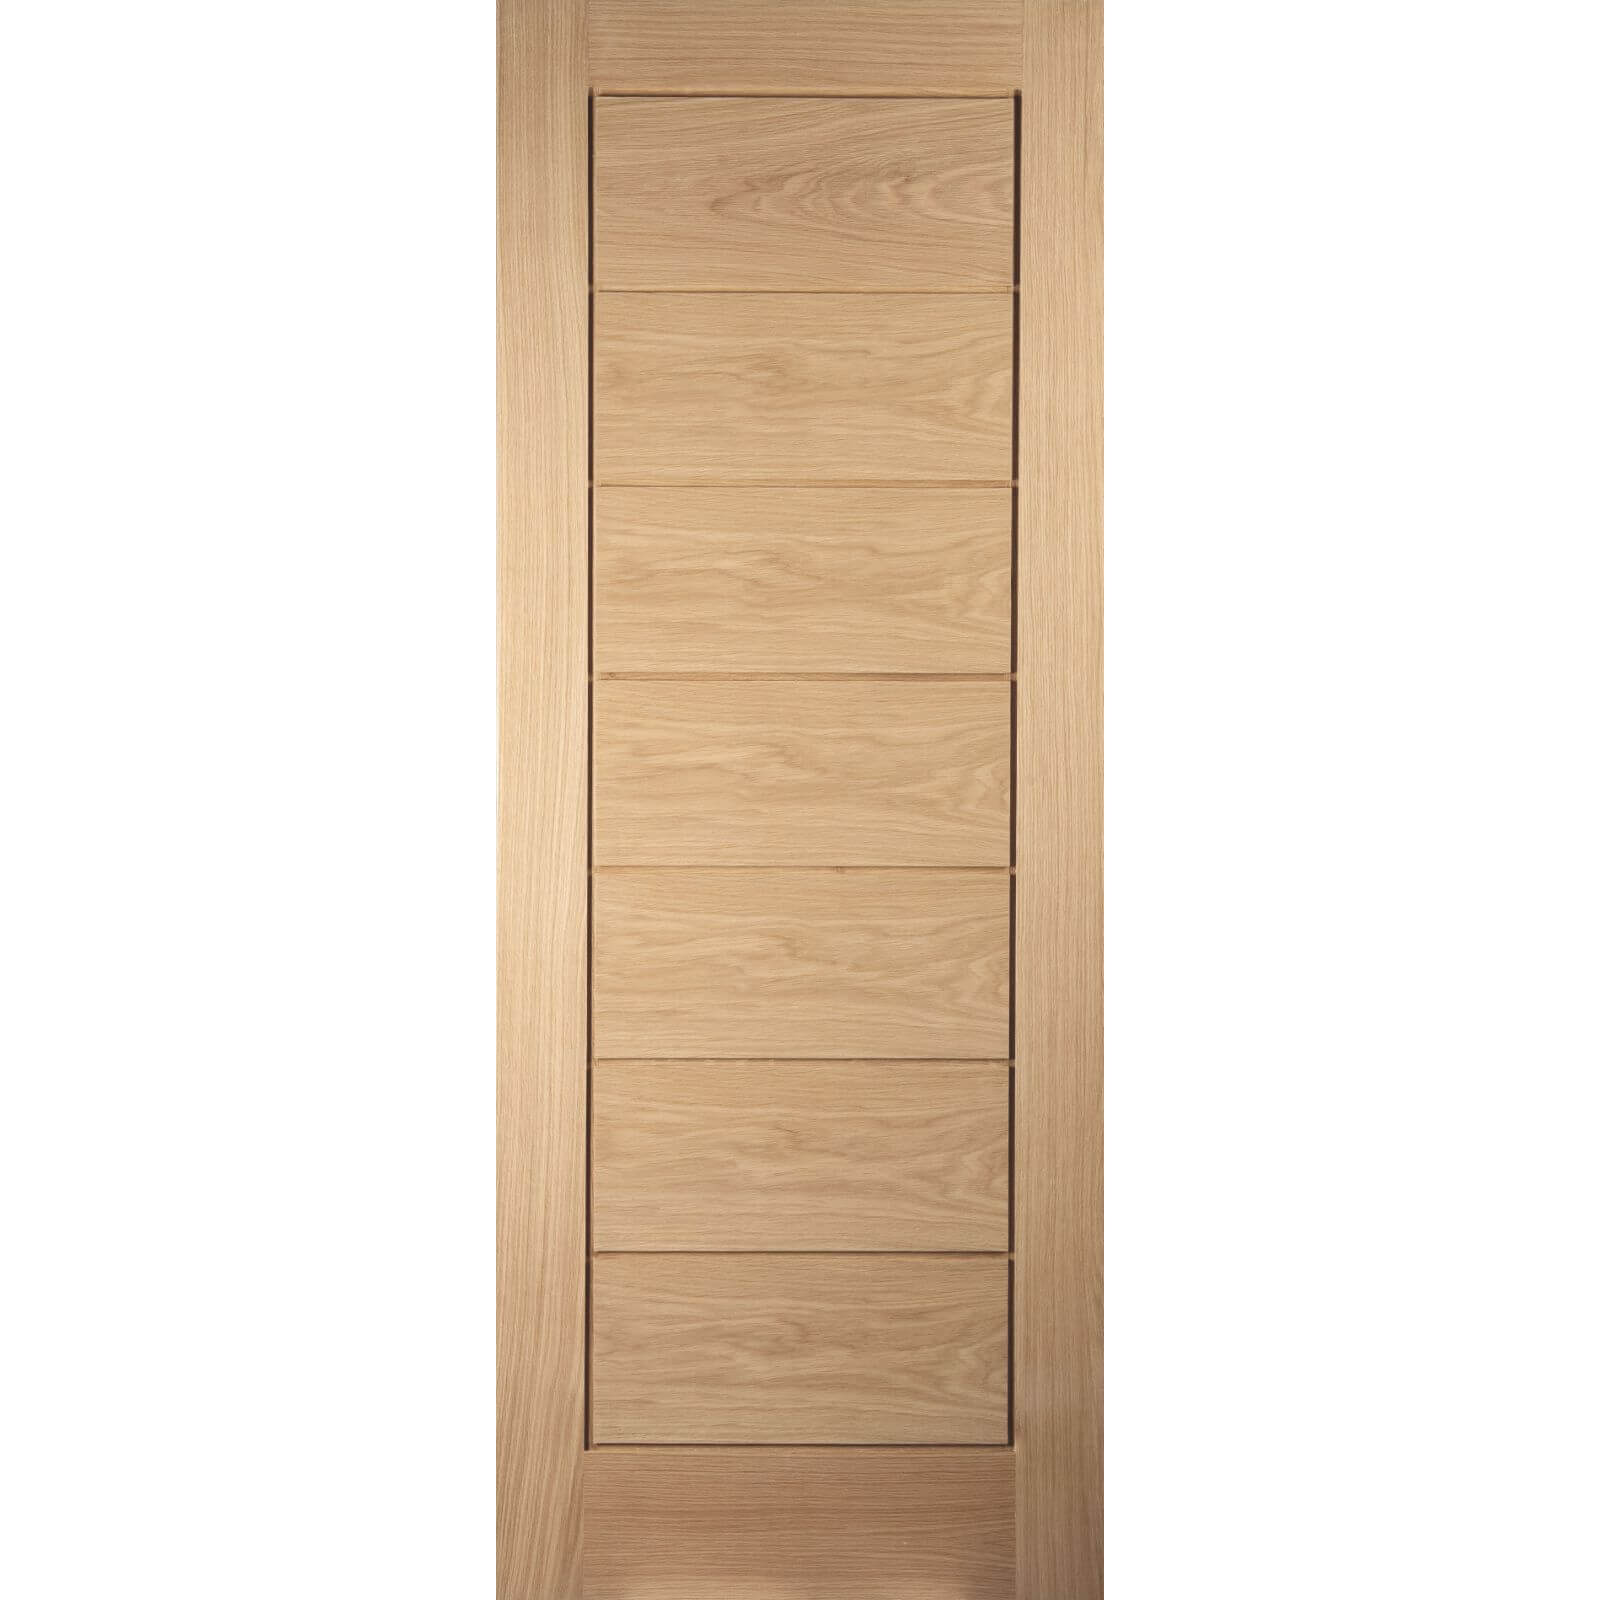 Horizontal 7 Panel White Oak Veneer Internal Door - 610mm Wide